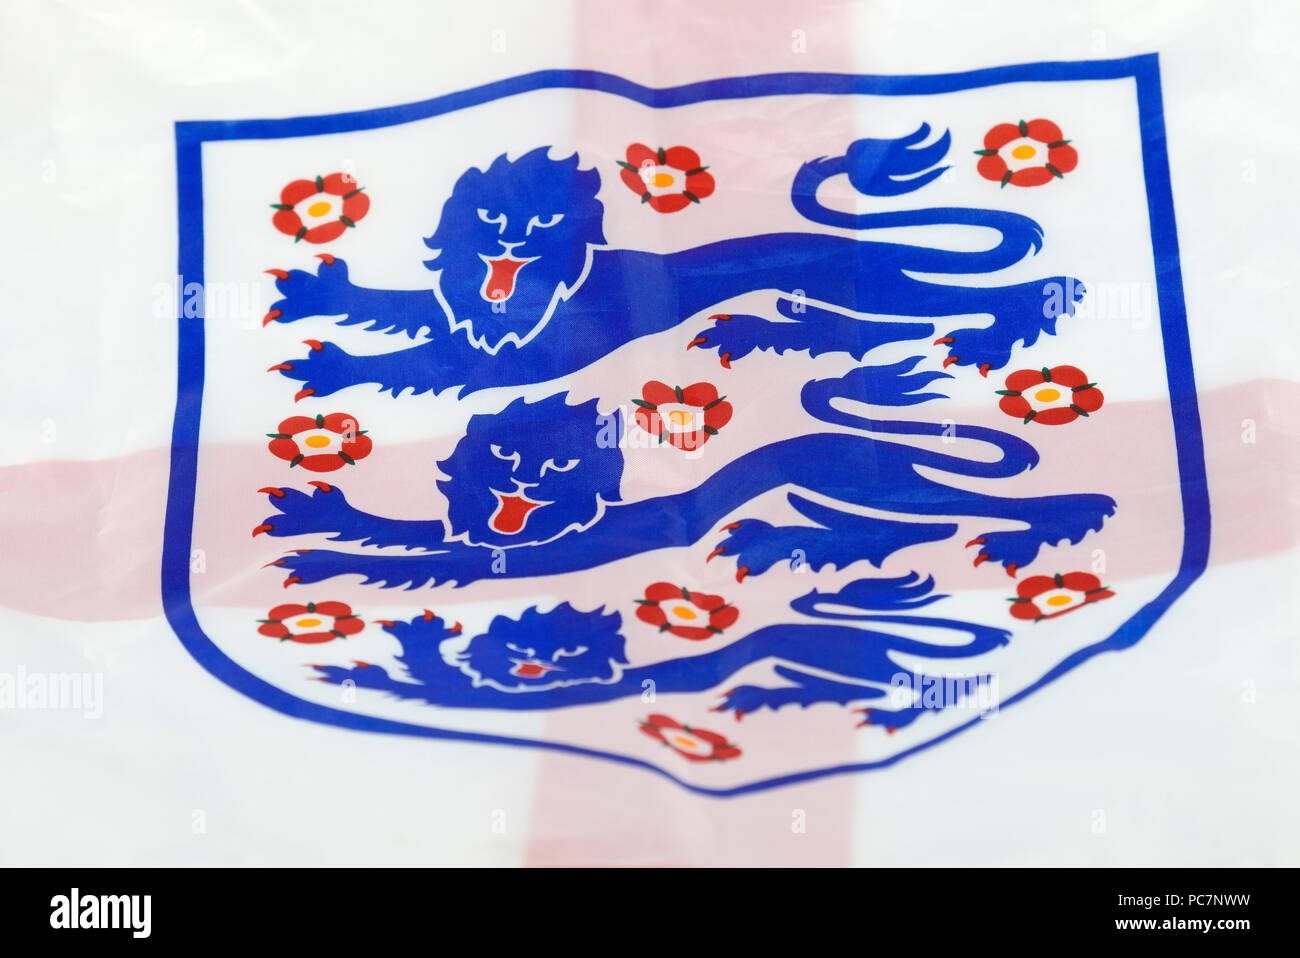 England national football team logo Stock Photo